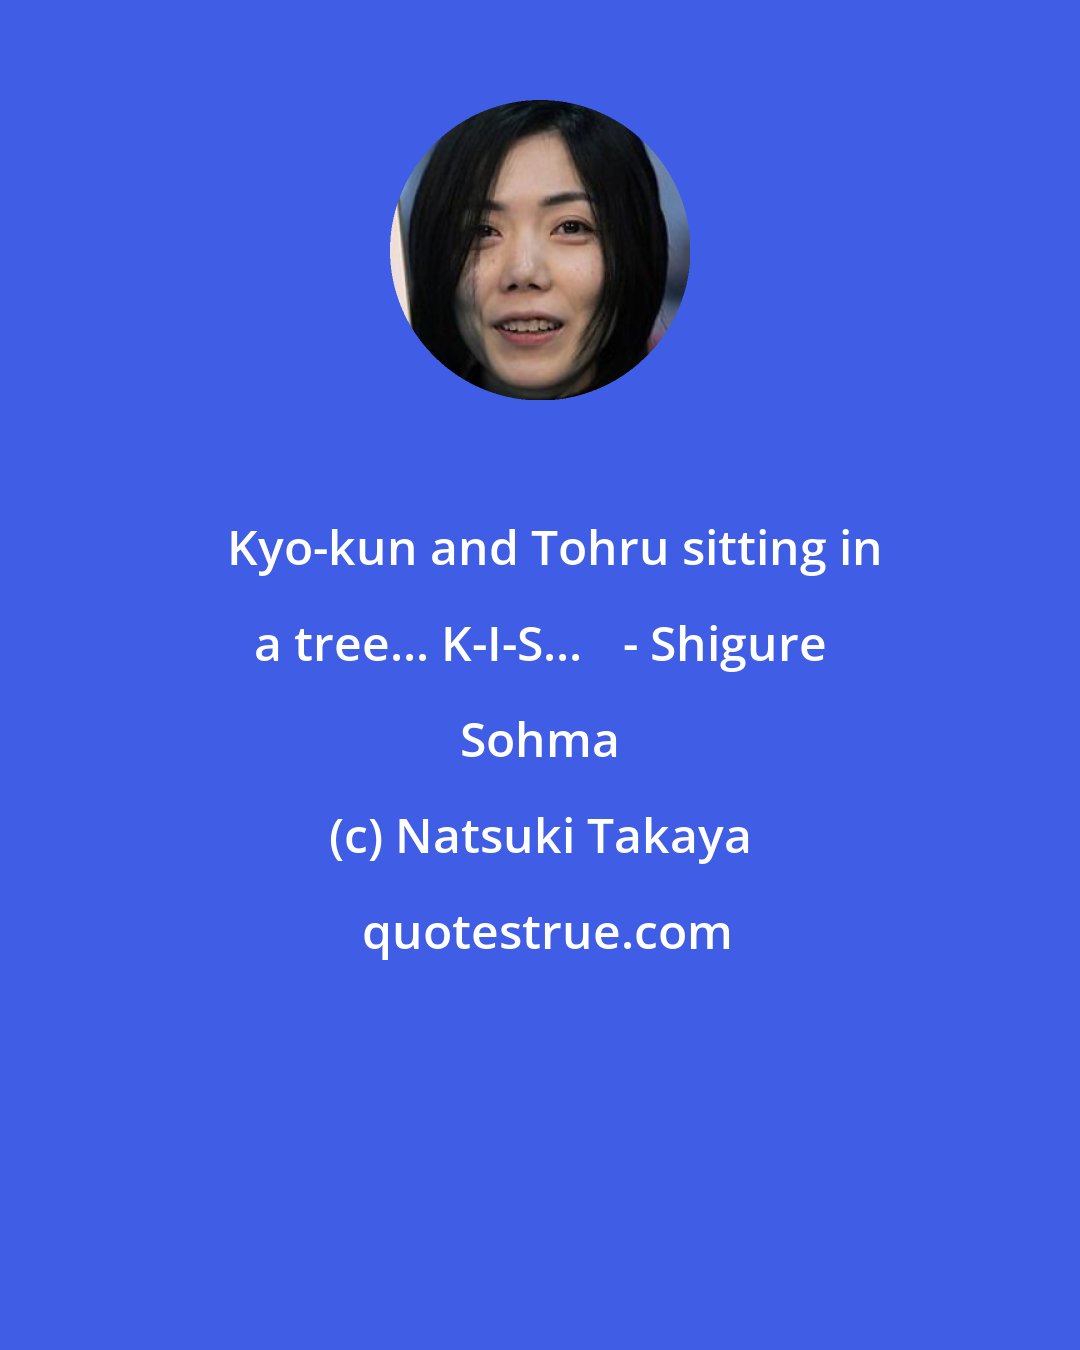 Natsuki Takaya: ♪Kyo-kun and Tohru sitting in a tree... K-I-S...♪ - Shigure Sohma